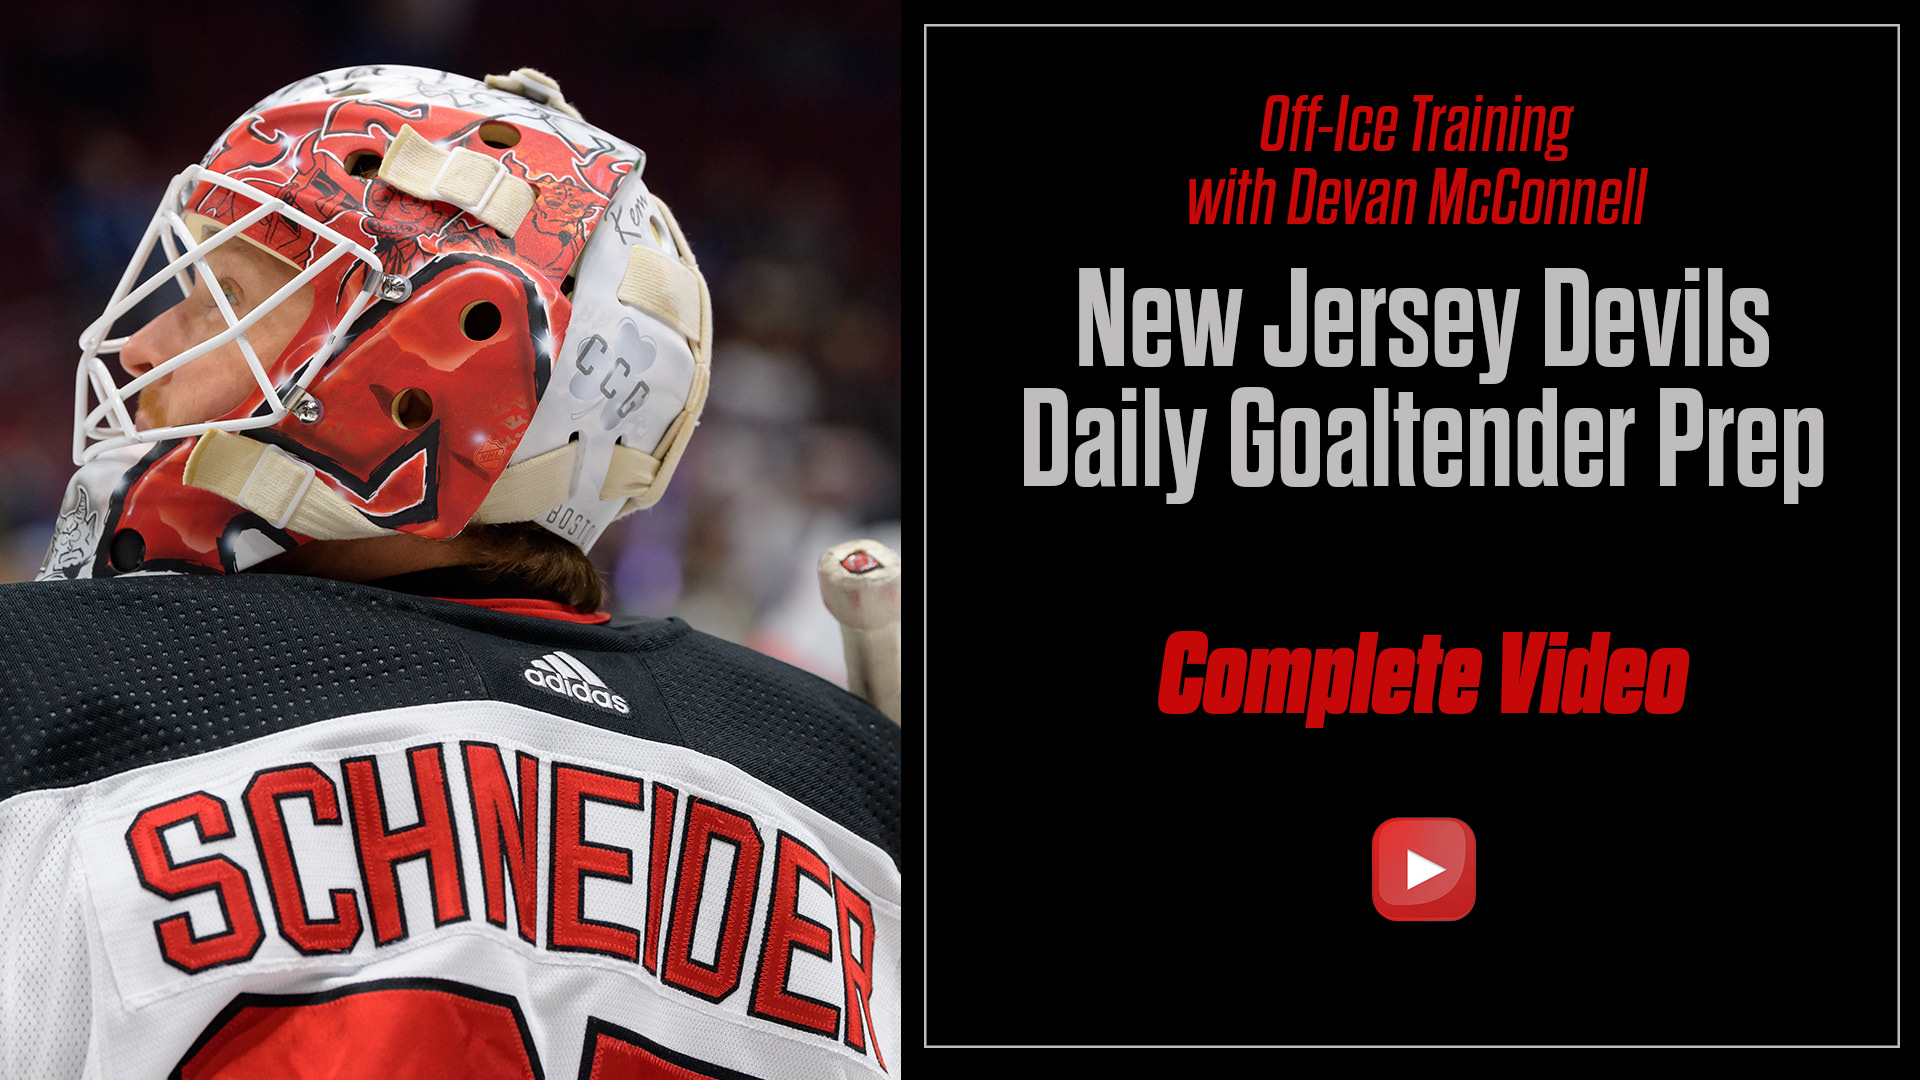 Off-Ice: New Jersey Devils Daily Goaltender Prep Complete Program